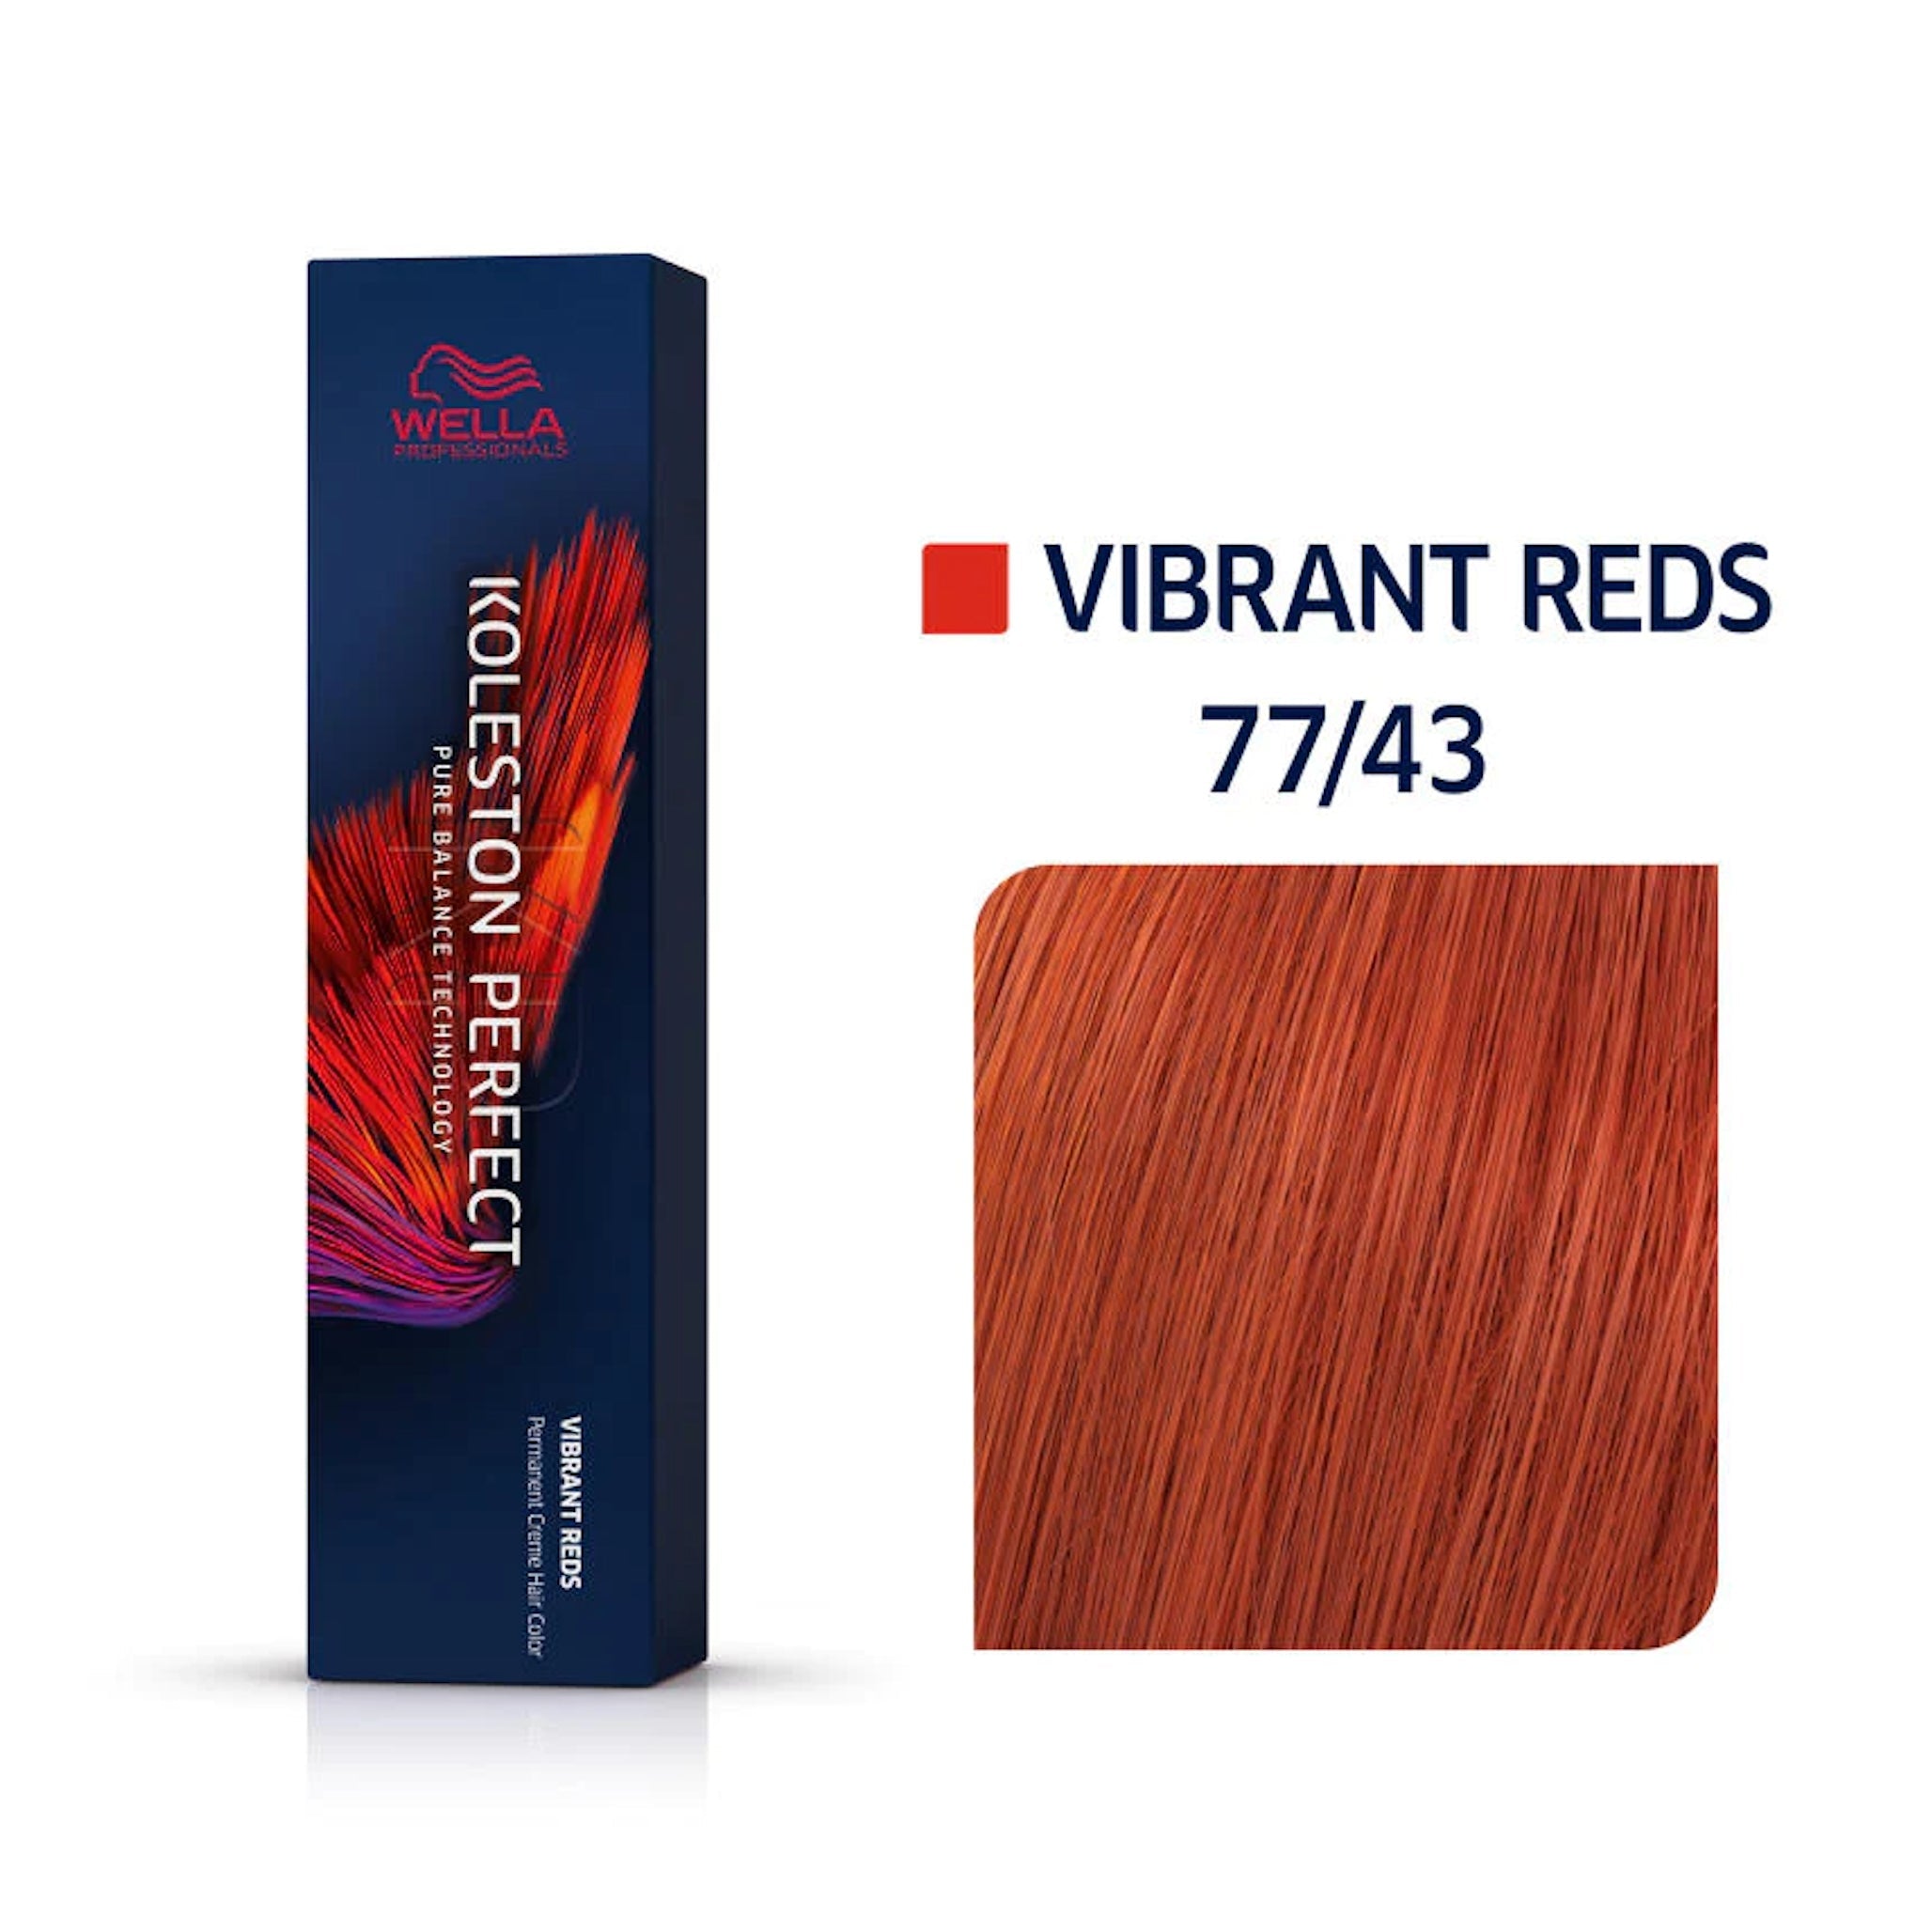 Wella Koleston Vibrant Reds 77/43 Hair Colour (60ml) - beautyhair.co.ukHair Colour